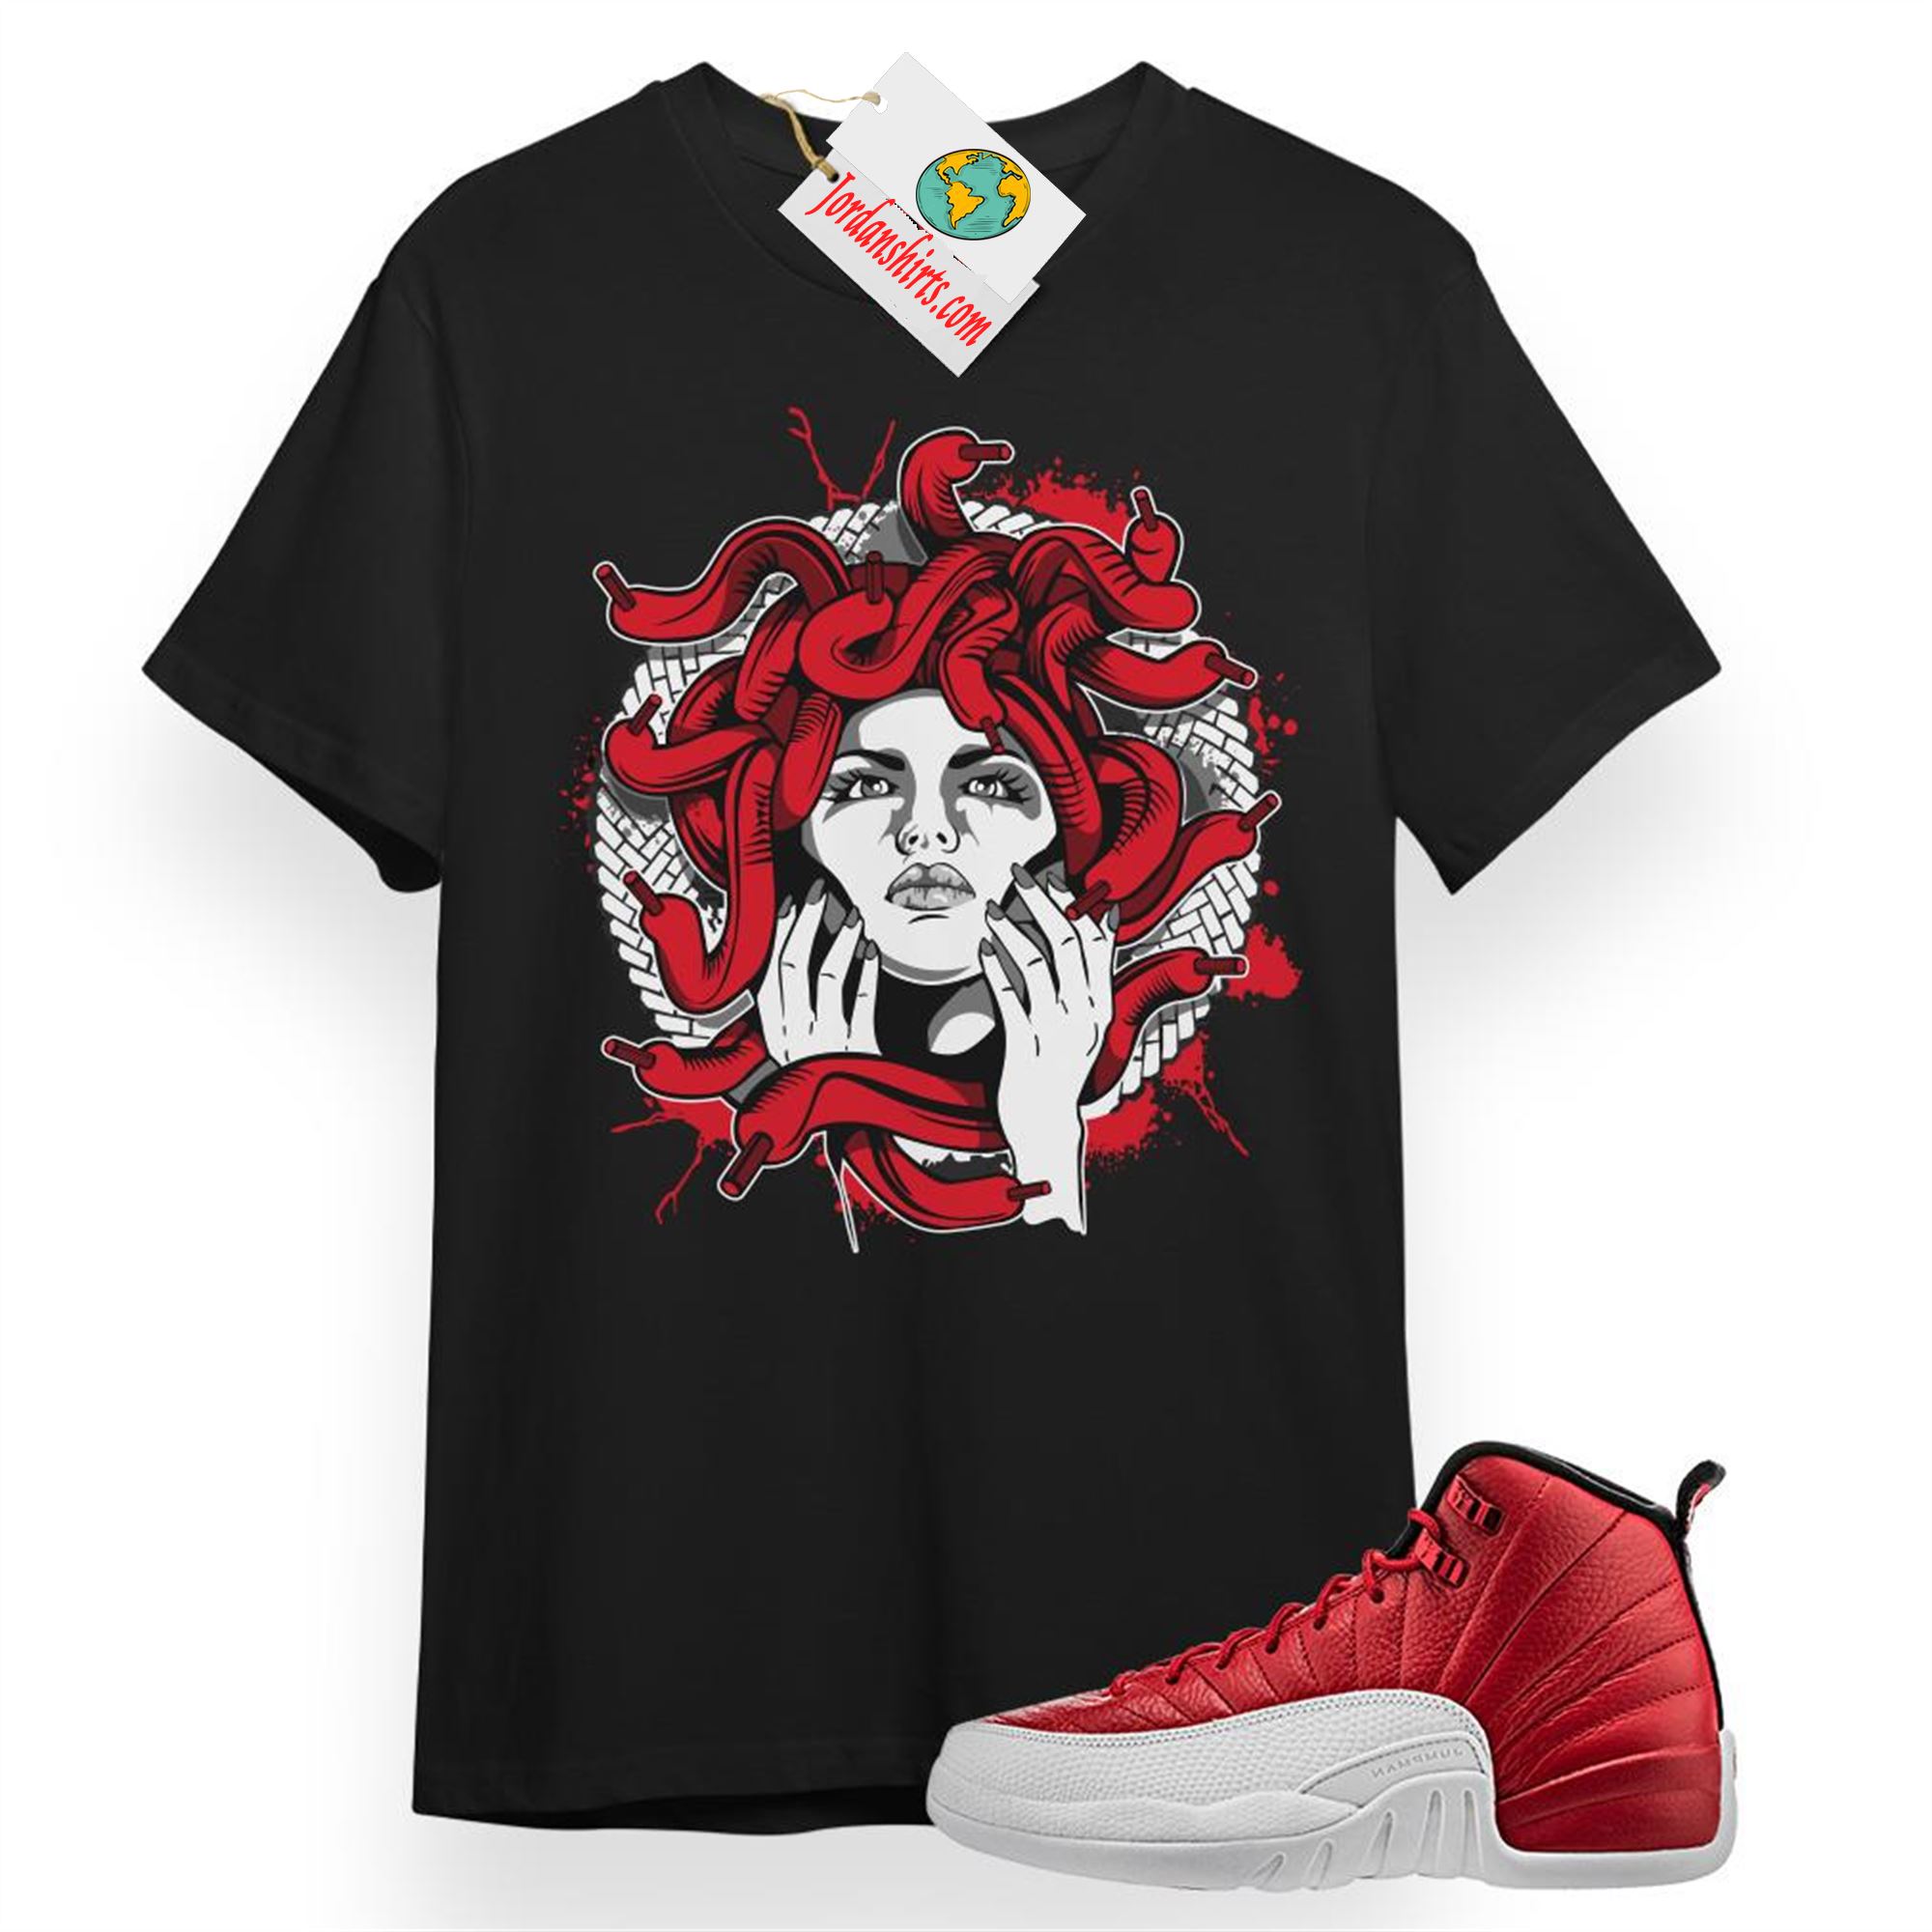 Jordan 12 Shirt, Medusa Black T-shirt Air Jordan 12 Gym Red 12s Size Up To 5xl